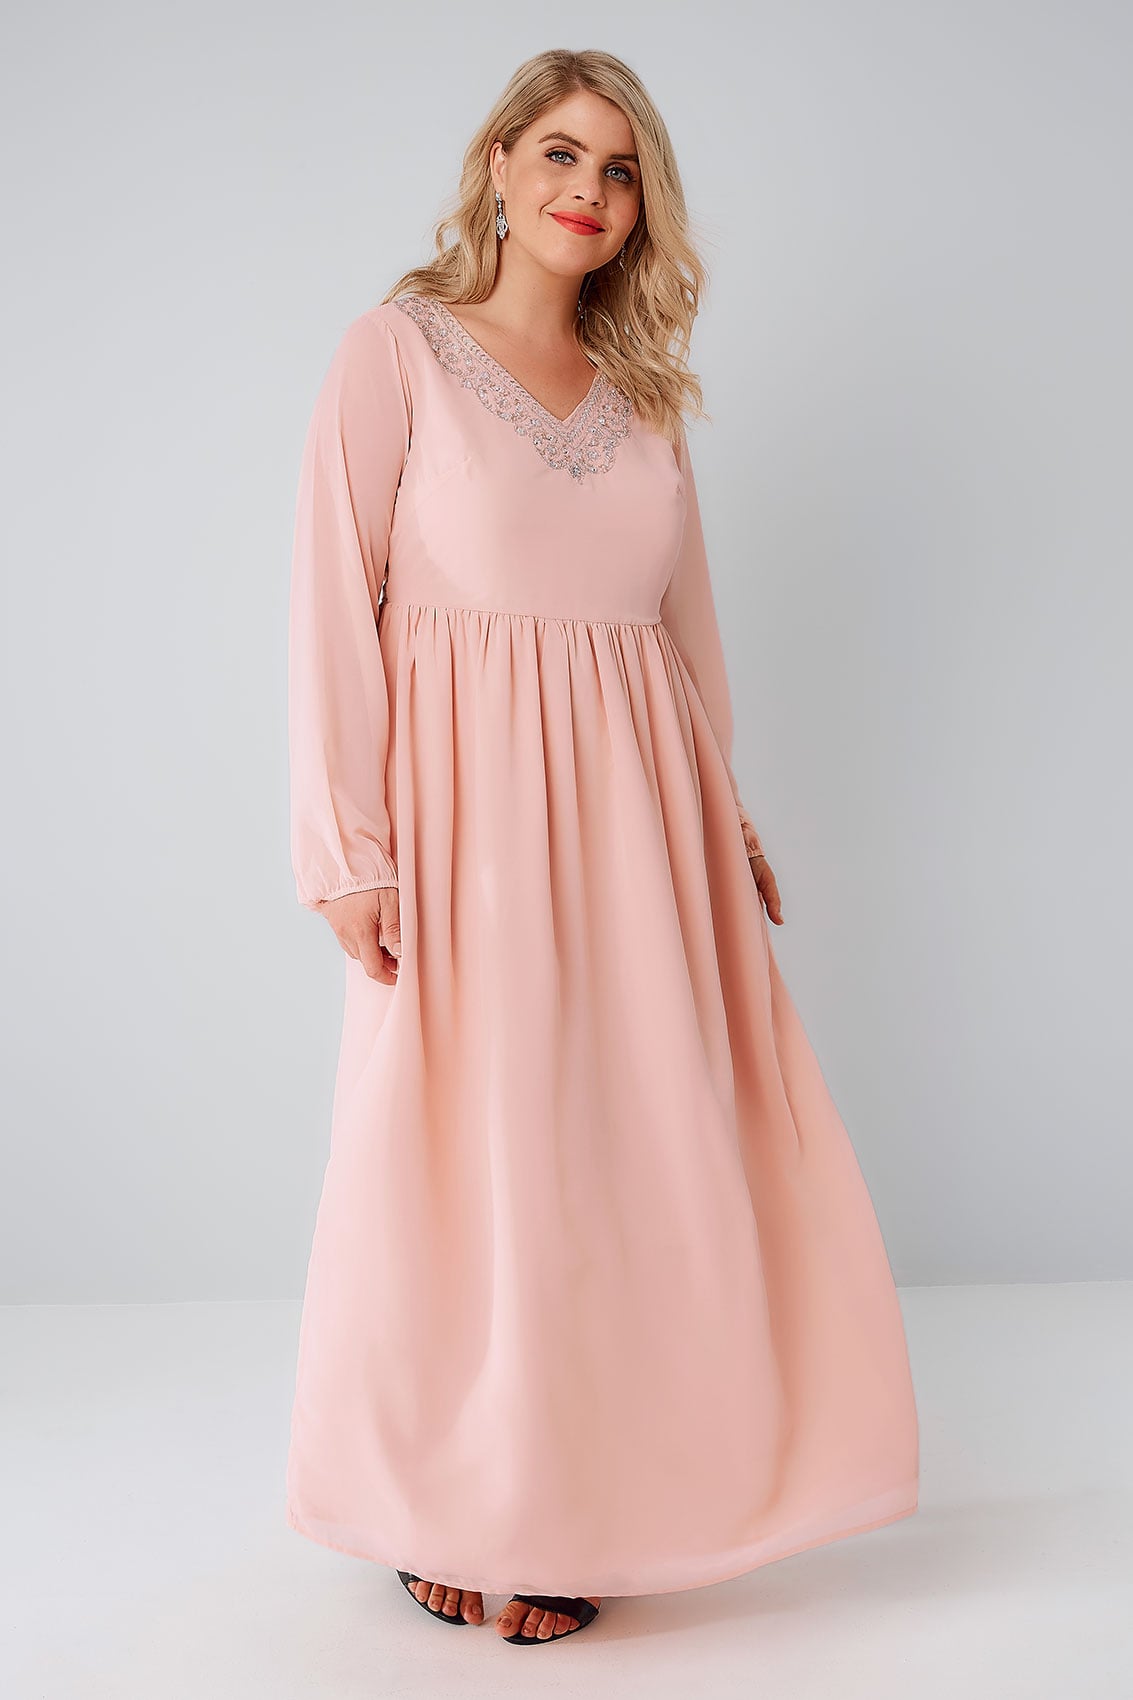 Blush Pink Chiffon Maxi Dress With Embellished V-Neckline, Plus size 16 ...